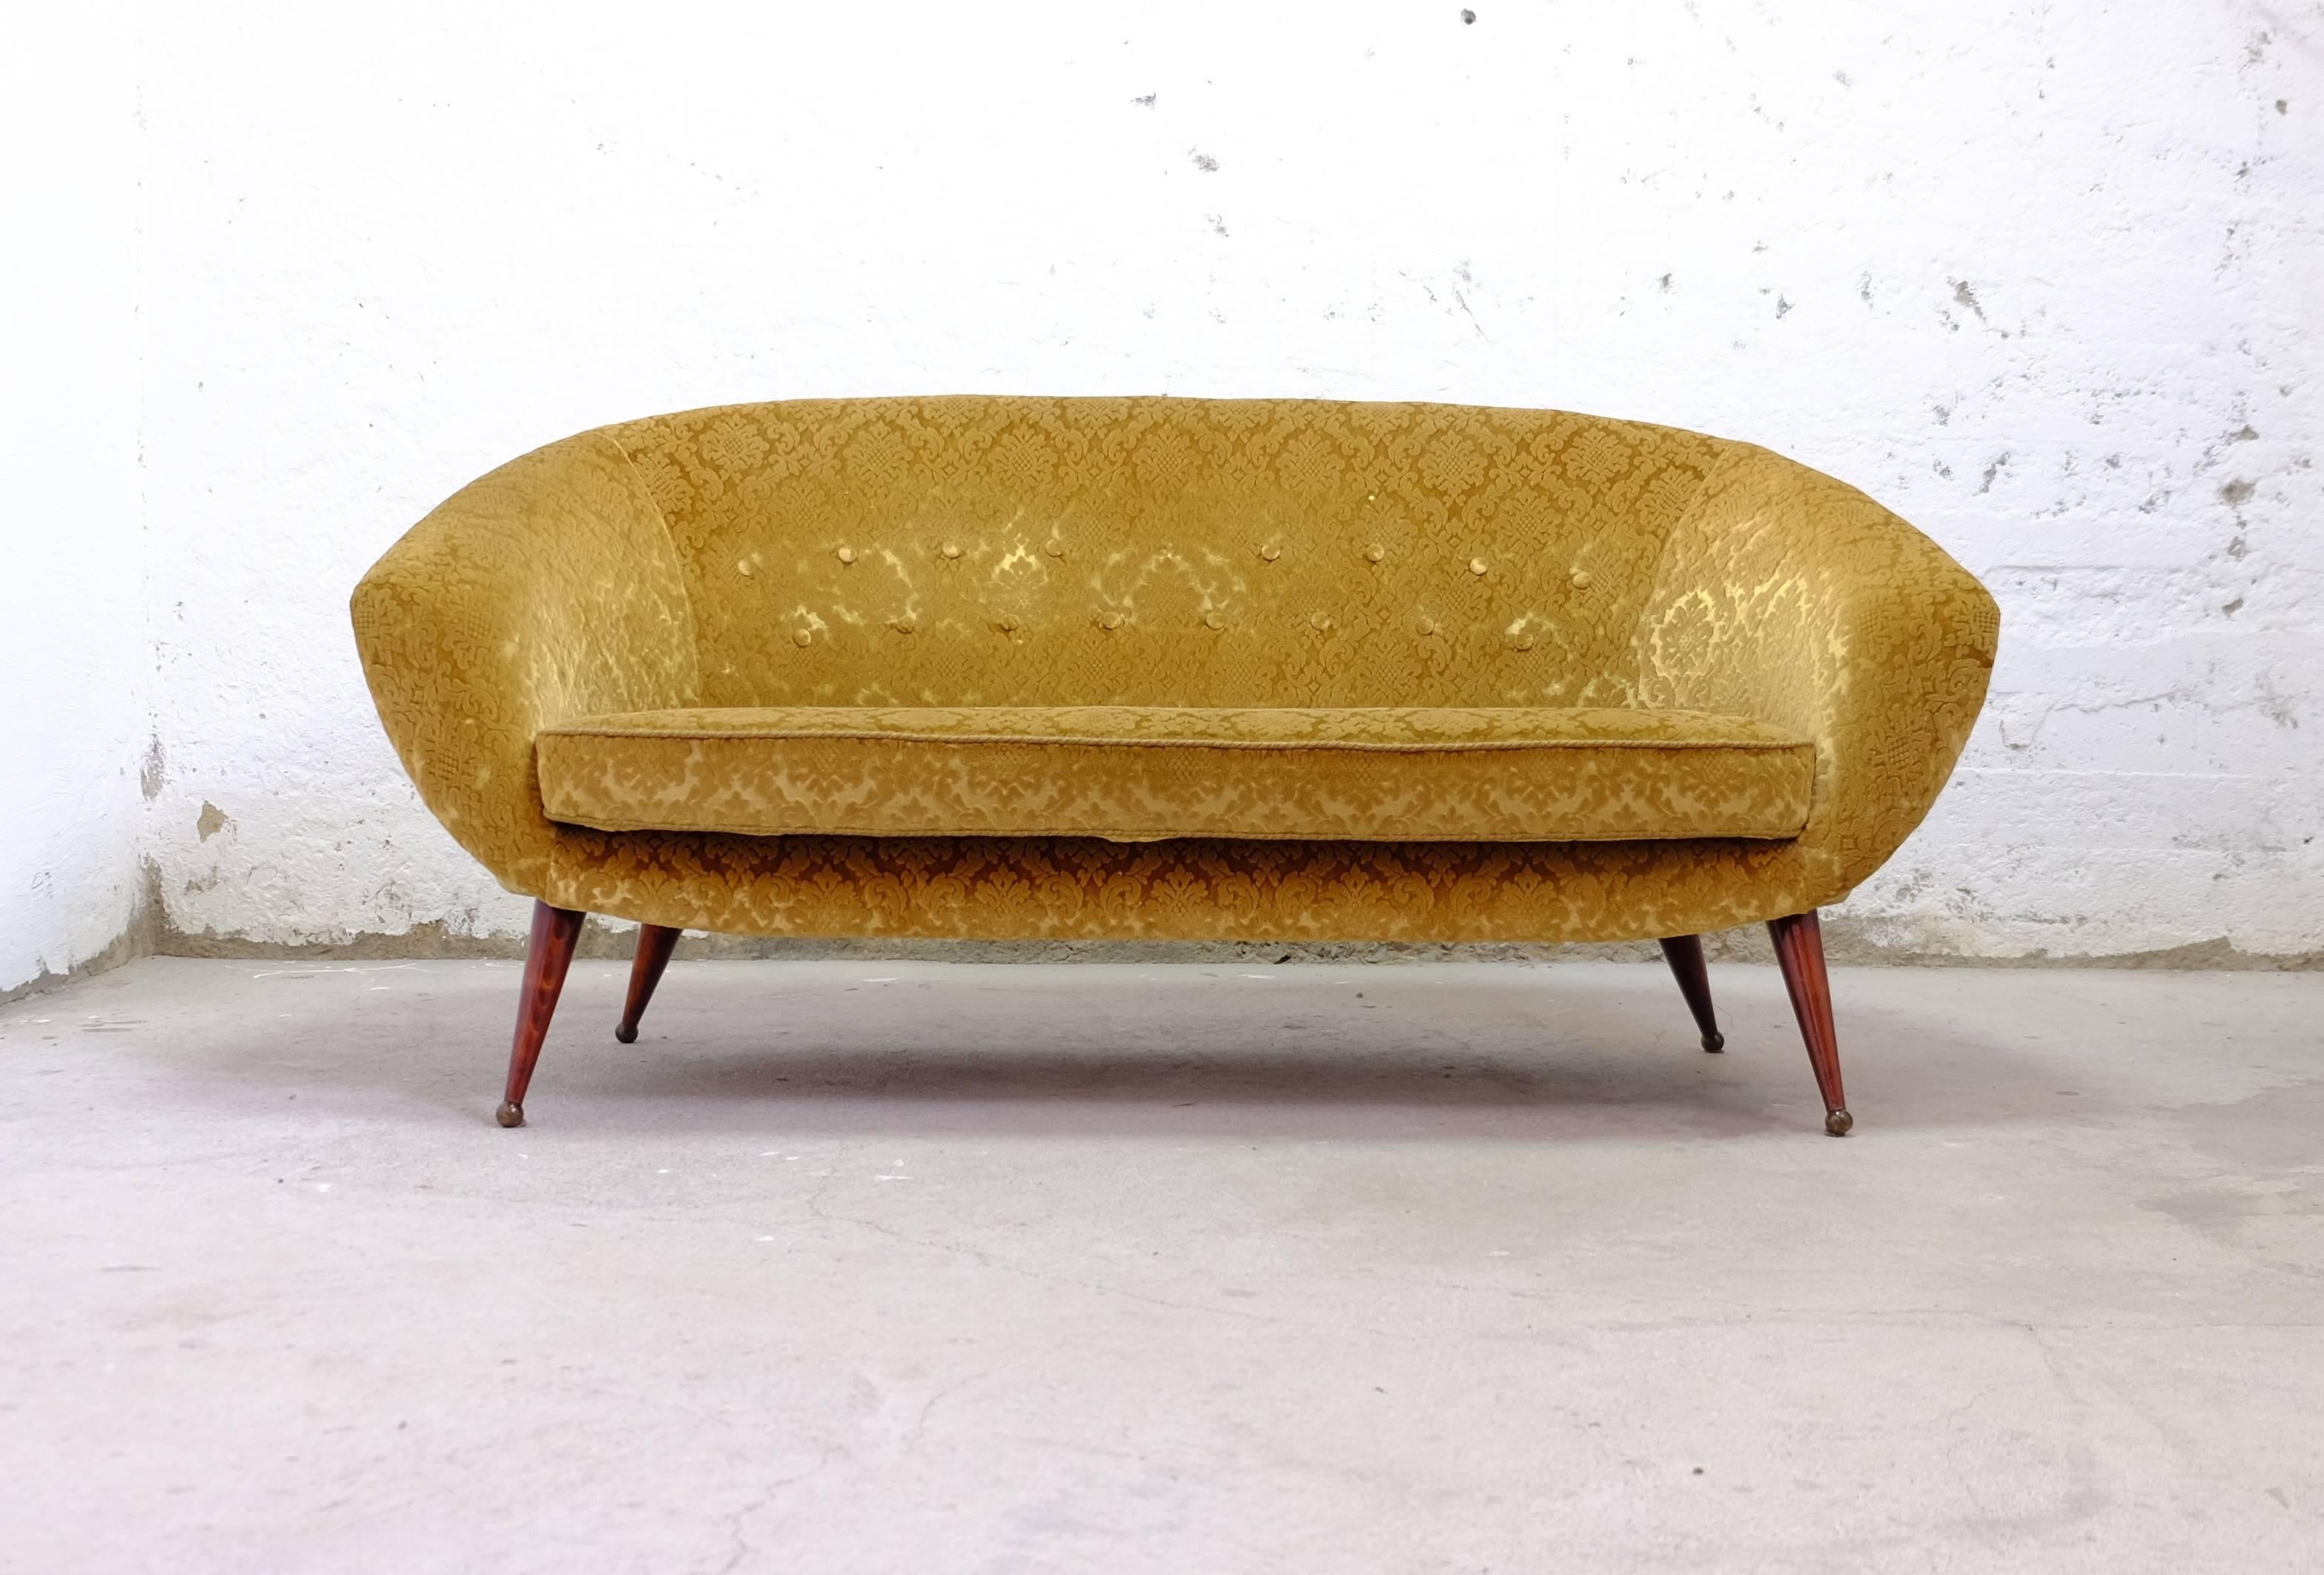 Fantastic Swedish sofa by Folke Jansson, 1950s.
Original fabric, beech legs and brass feet.
Produced by S.M Wincrantz in Skövde, Sweden.